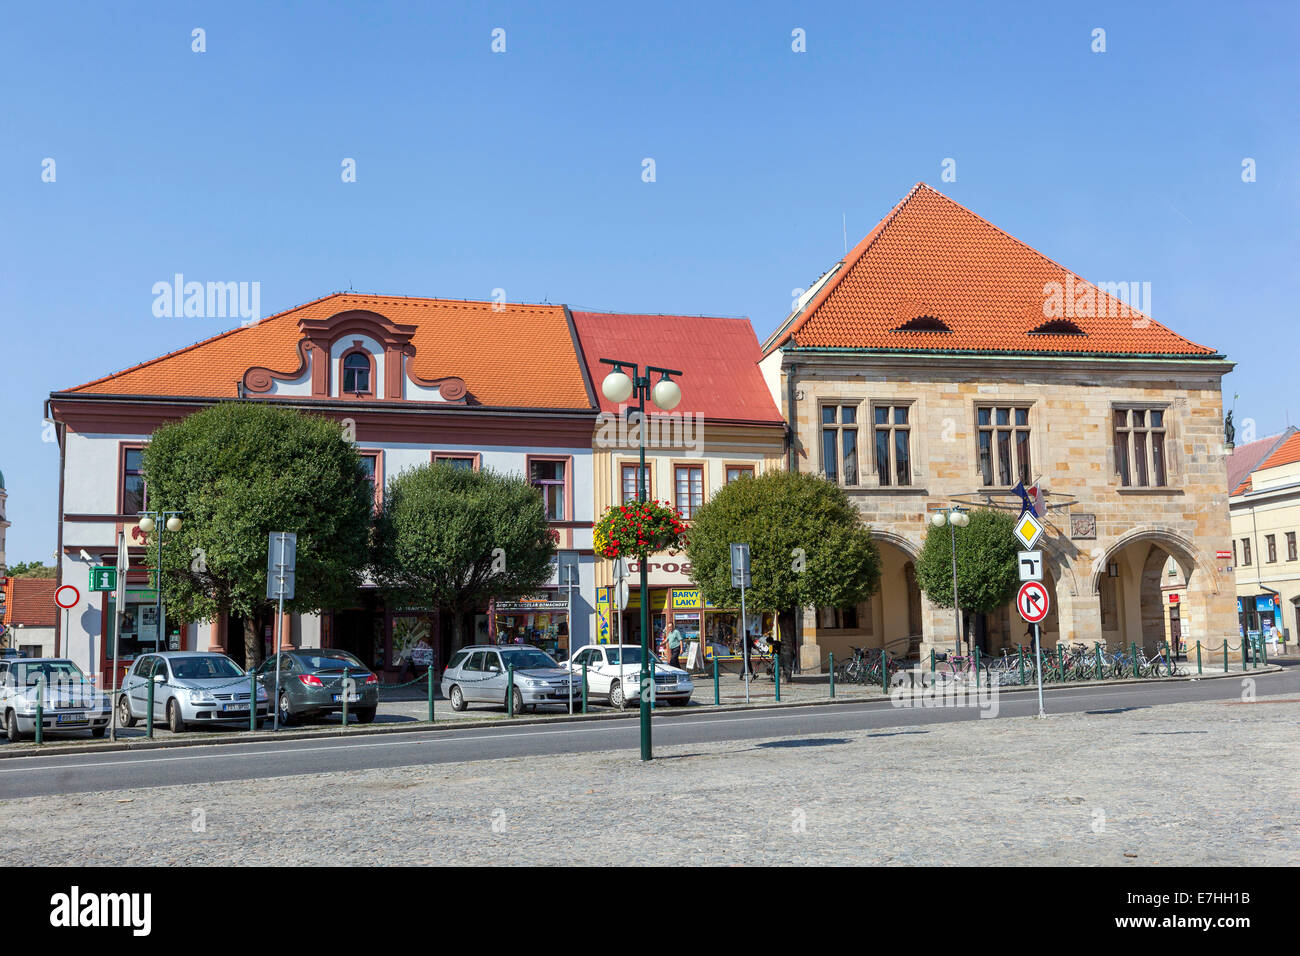 The Renaissance Town Hall, Nymburk, Central Bohemia, Czech Republic Stock Photo